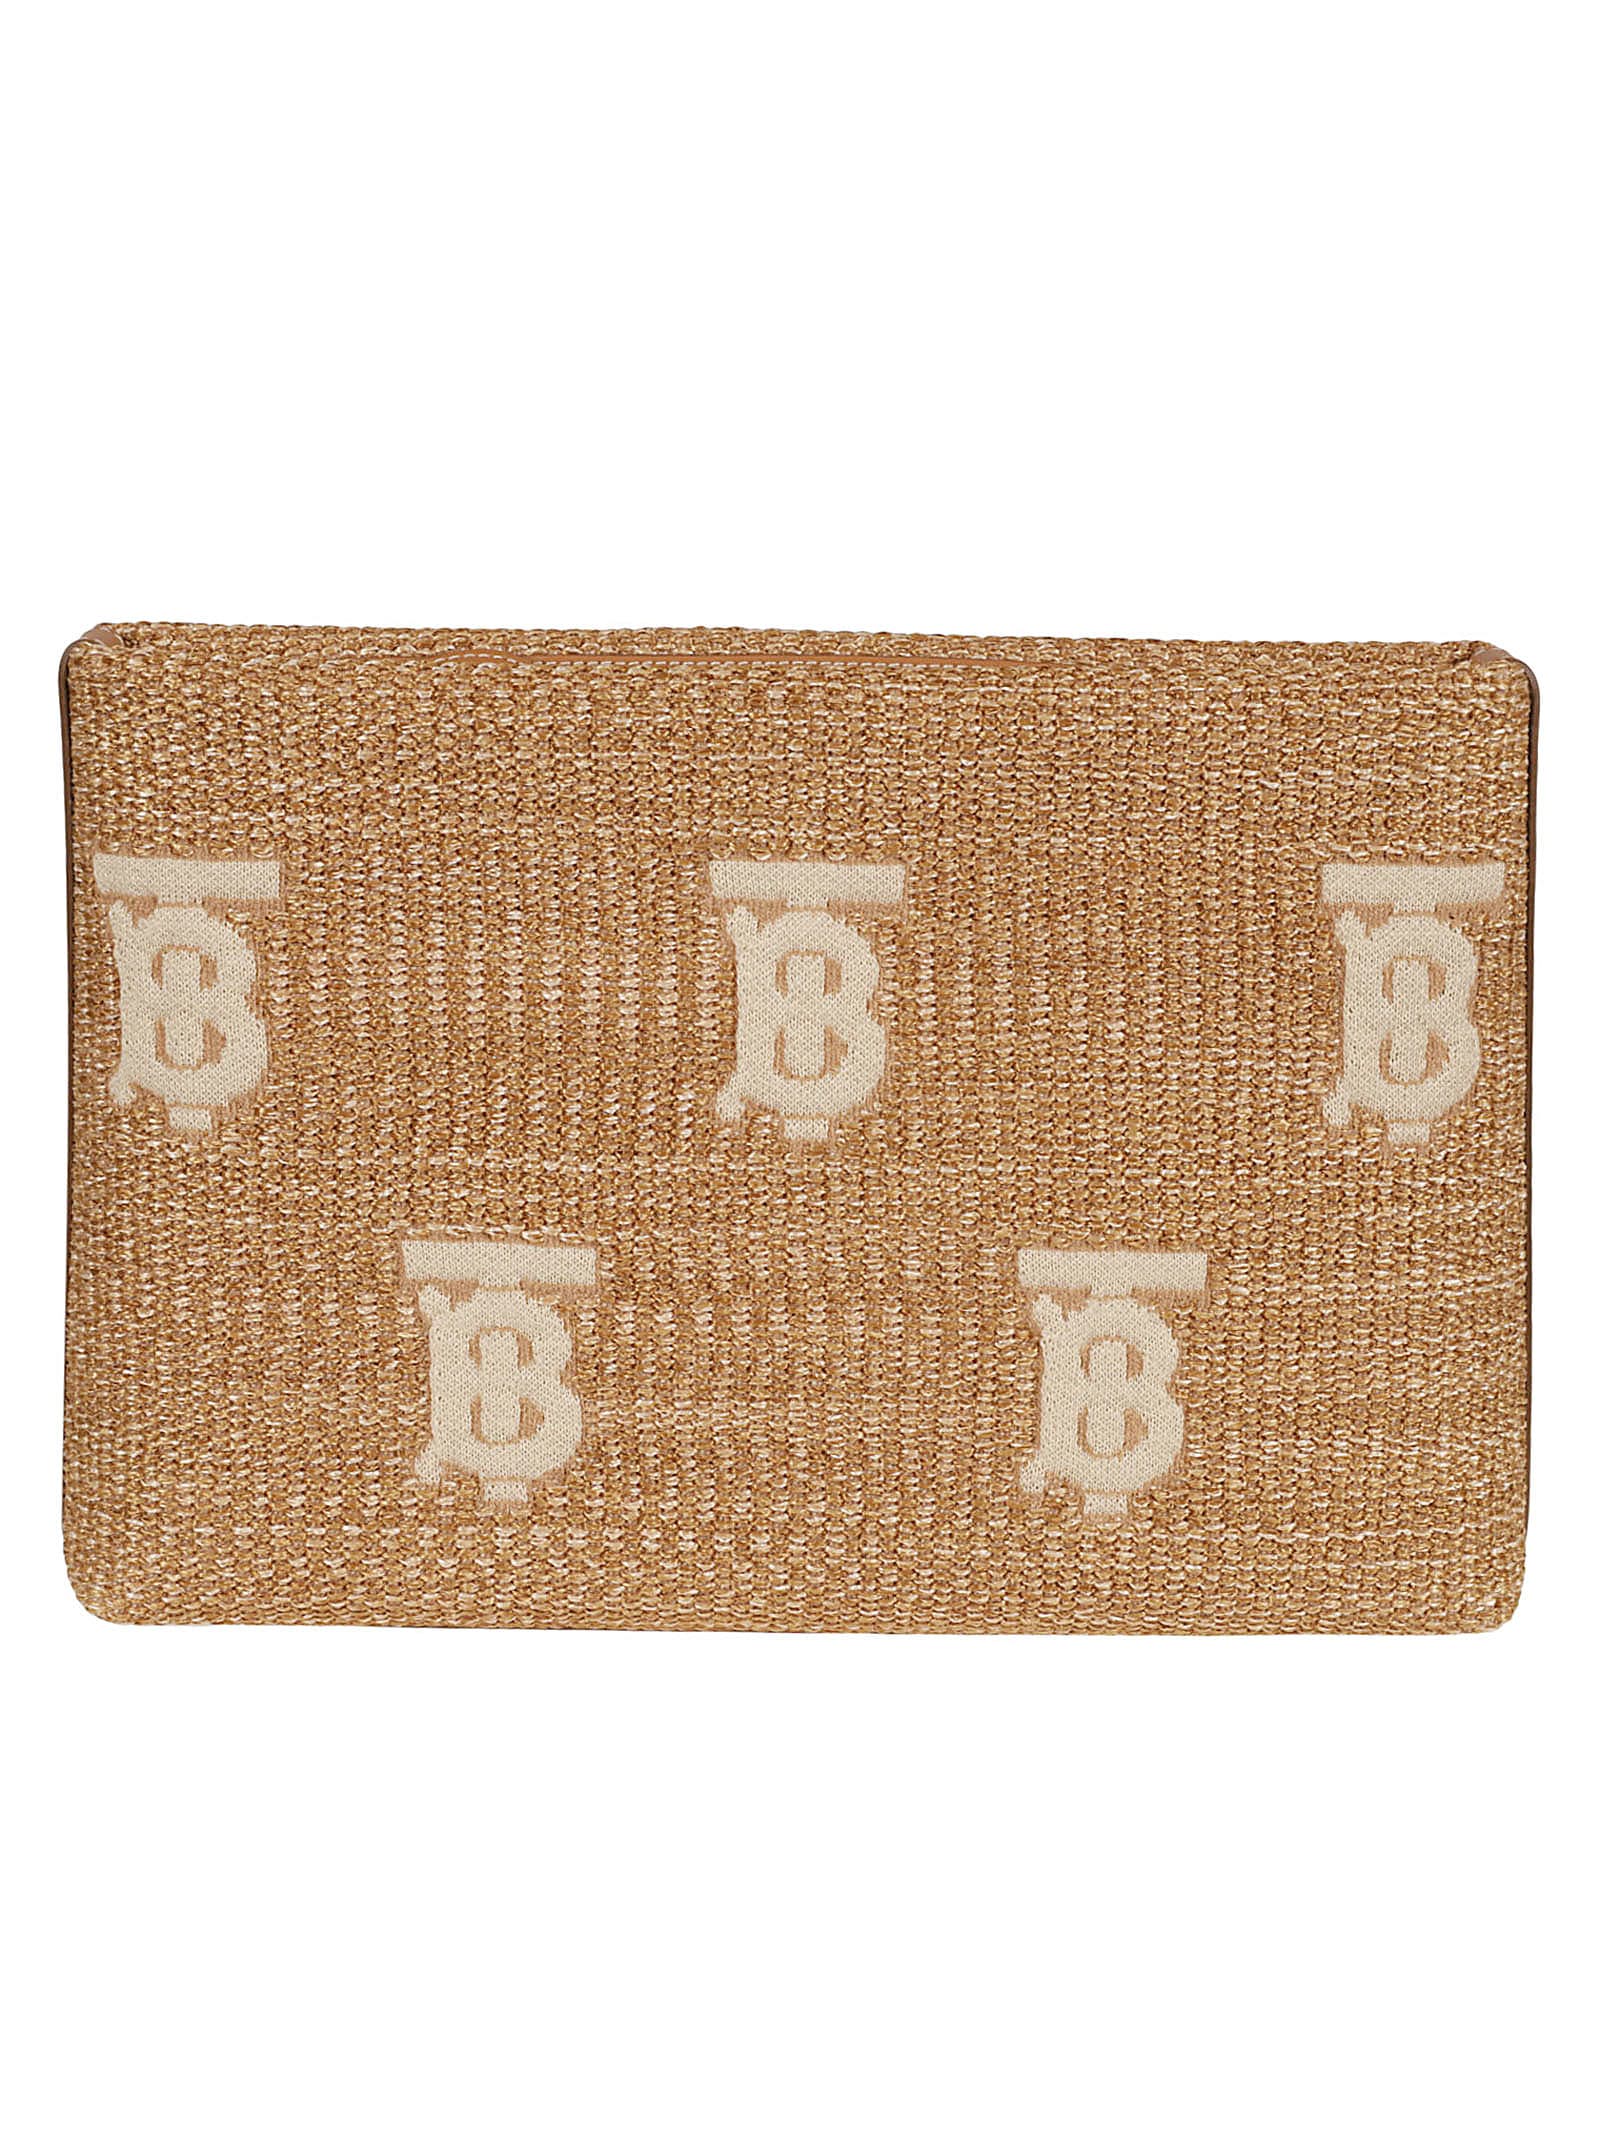 Burberry Logo Weaved Clutch In Natural/beige